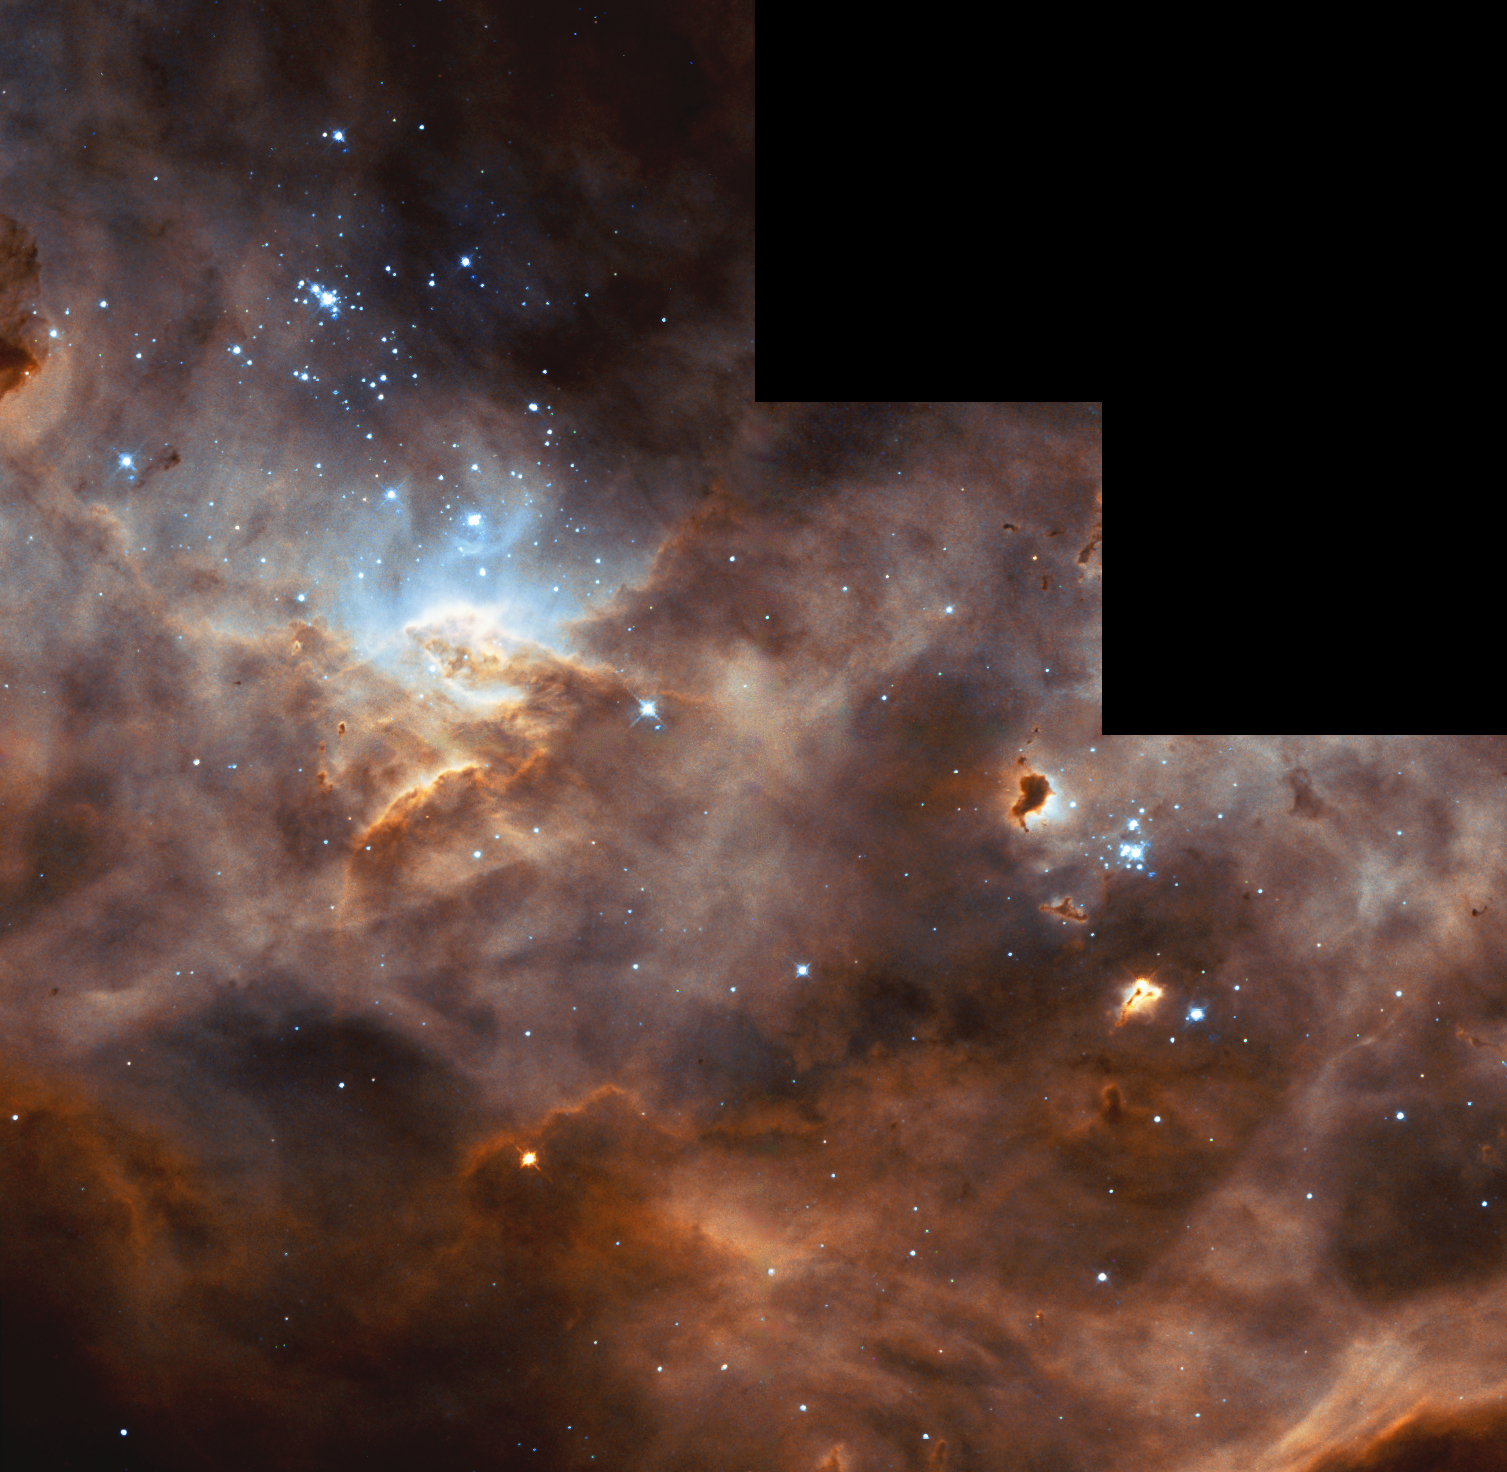 Credit:NASA/ESA and the Hubble Heritage Team (AURA/STScI)/HEIC